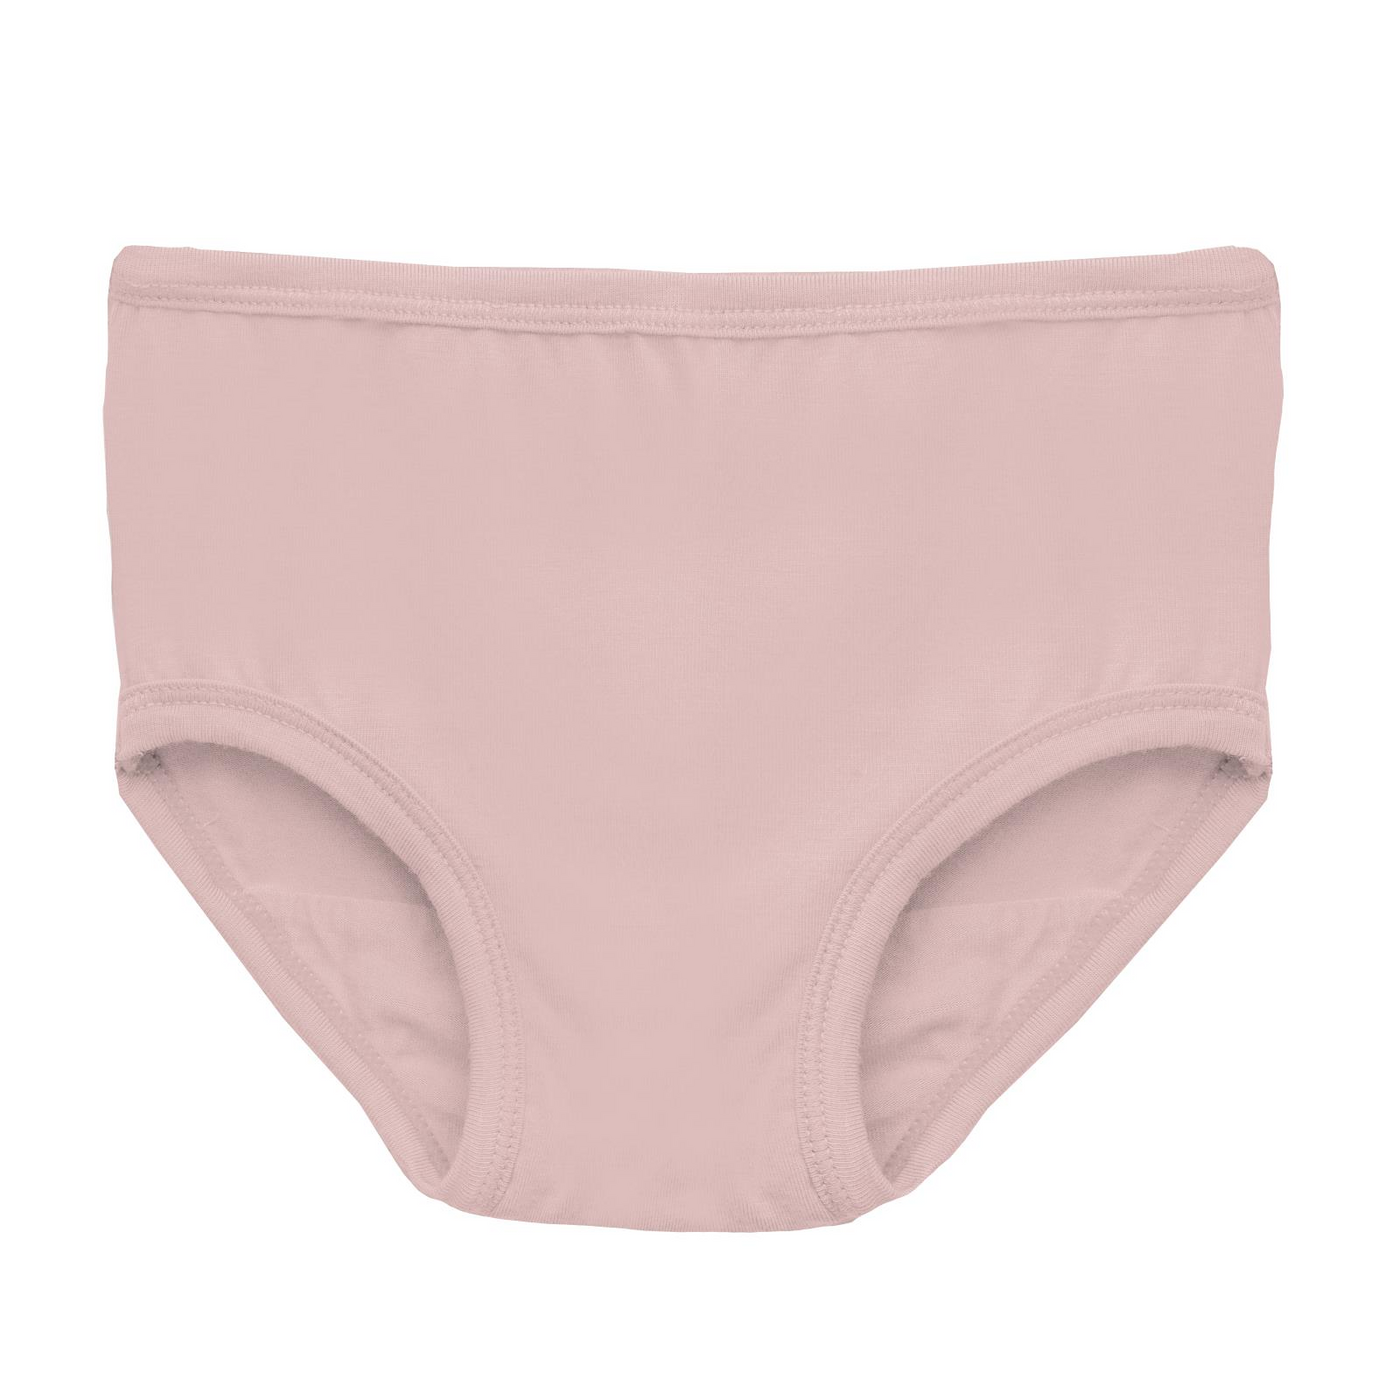 Kickee Pants Girl's Underwear: Solid Baby Rose